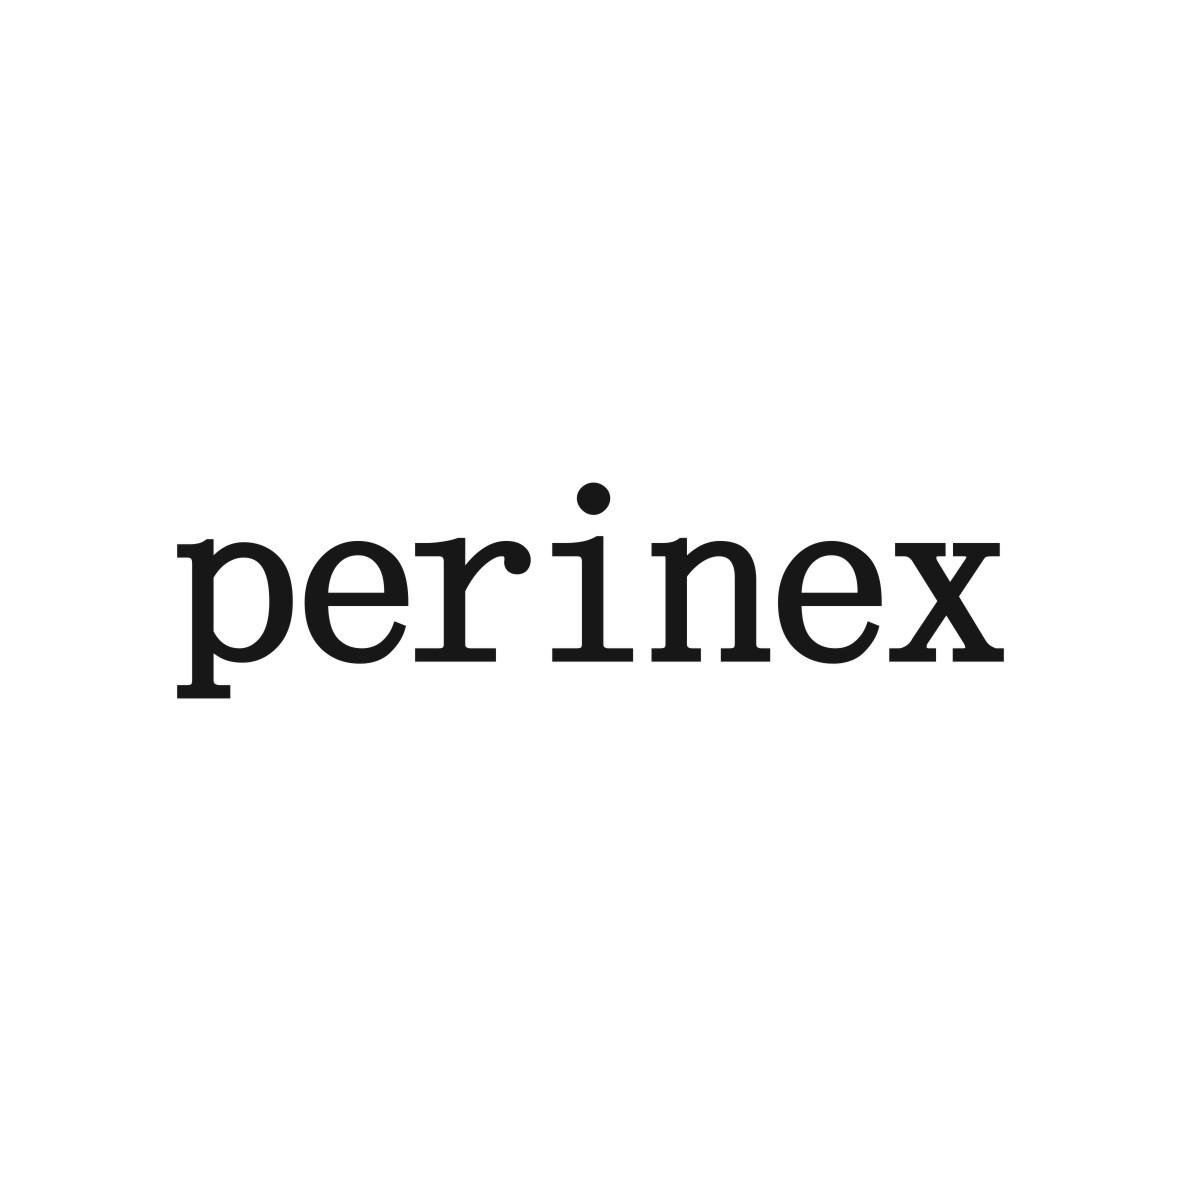 PERINEX商标图片